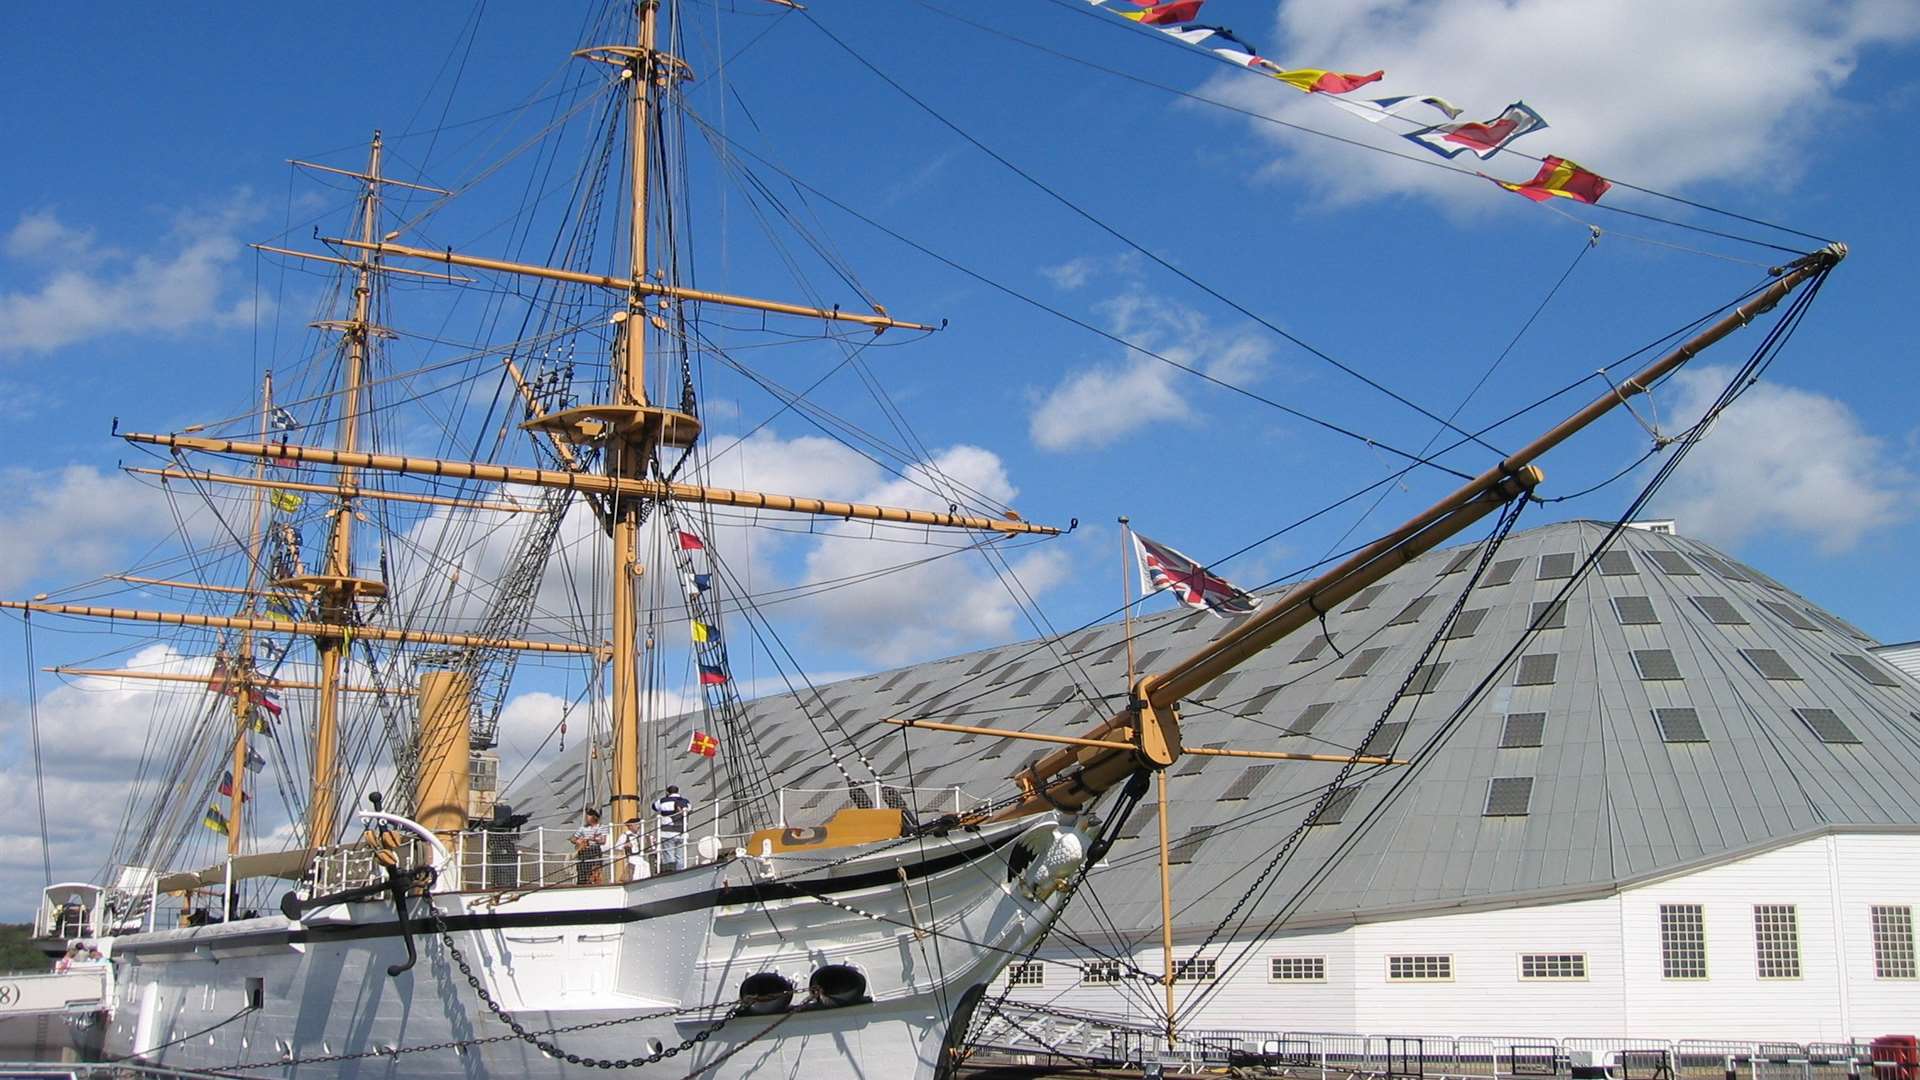 Chatham's Historic Dockyard